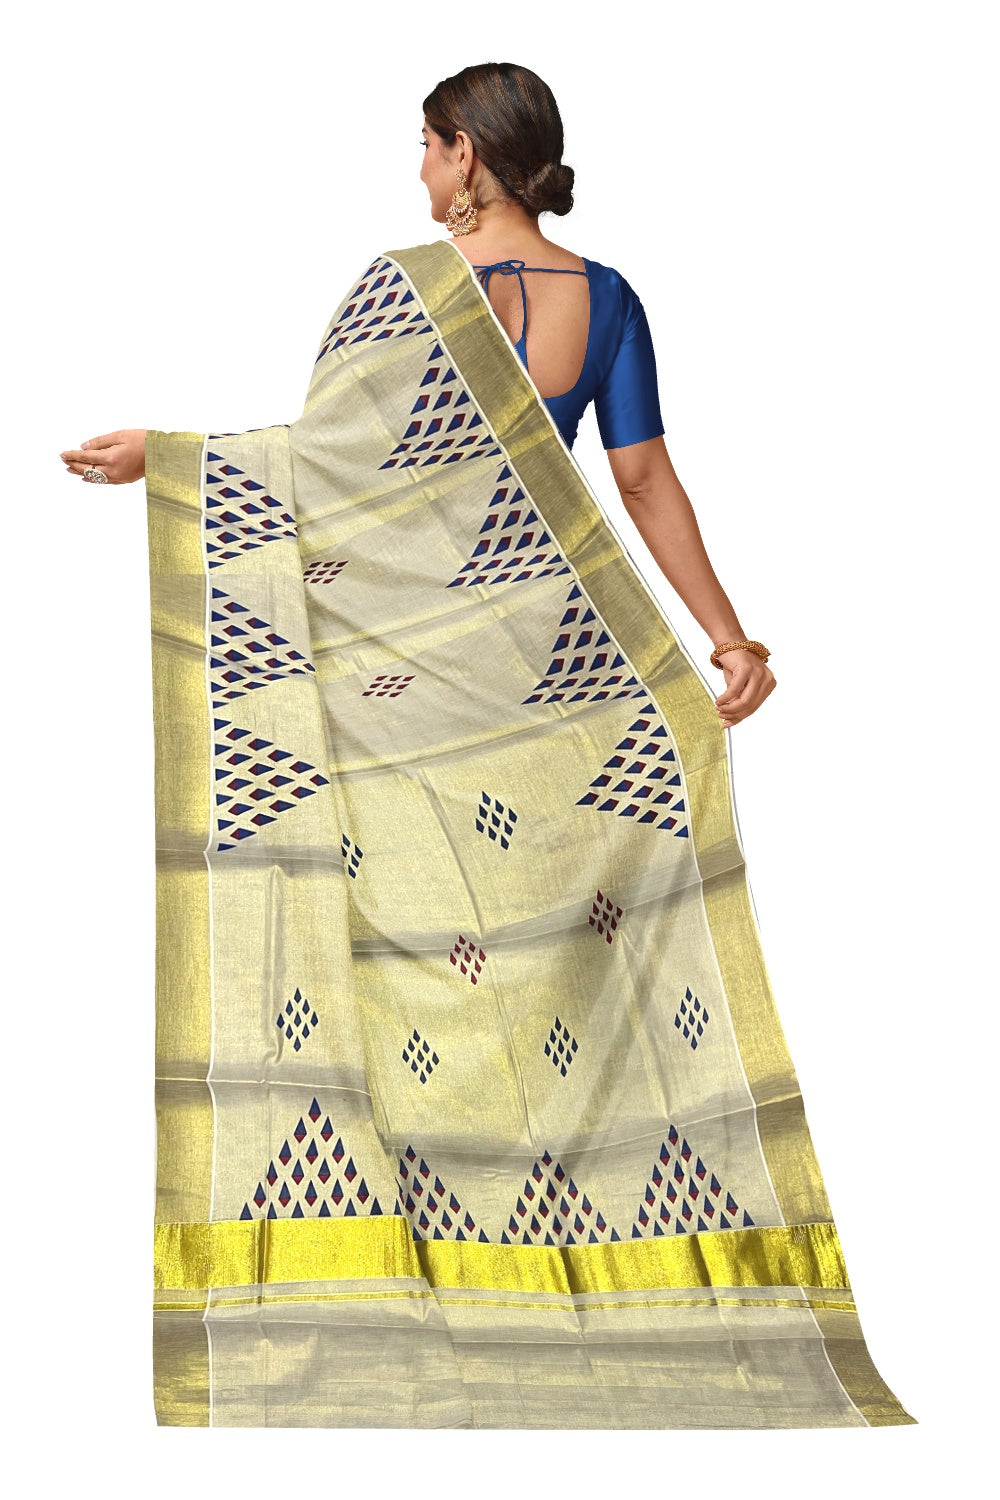 Kerala Tissue Kasavu Saree with Blue and Red Block Print Design